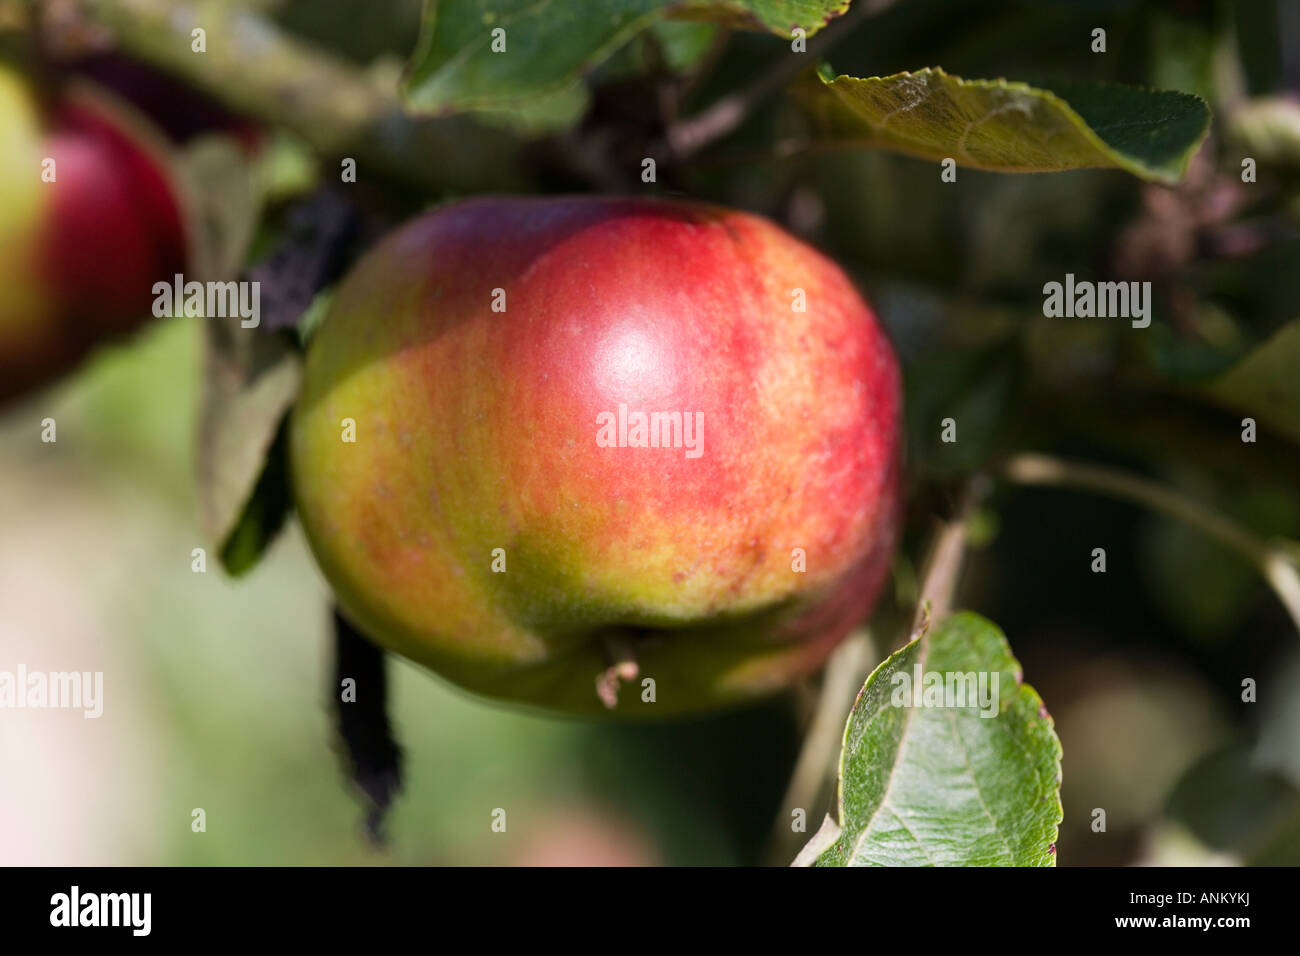 Healthy organic apple growing on a tree Stock Photo